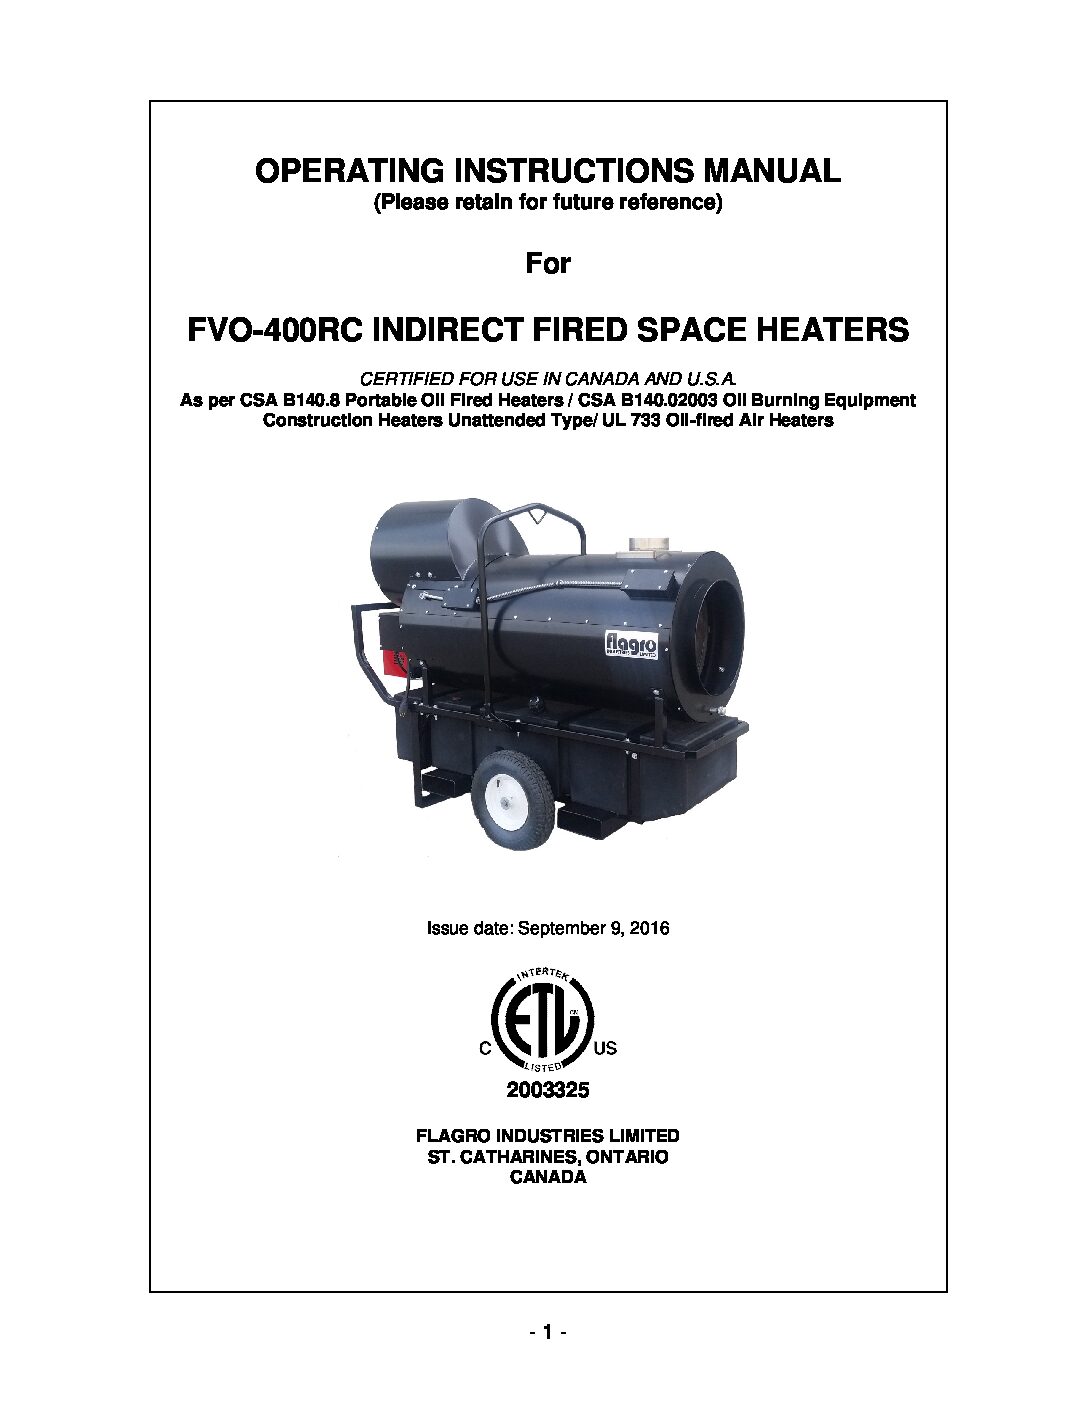 Flagro FVO 400RC Operating Manual